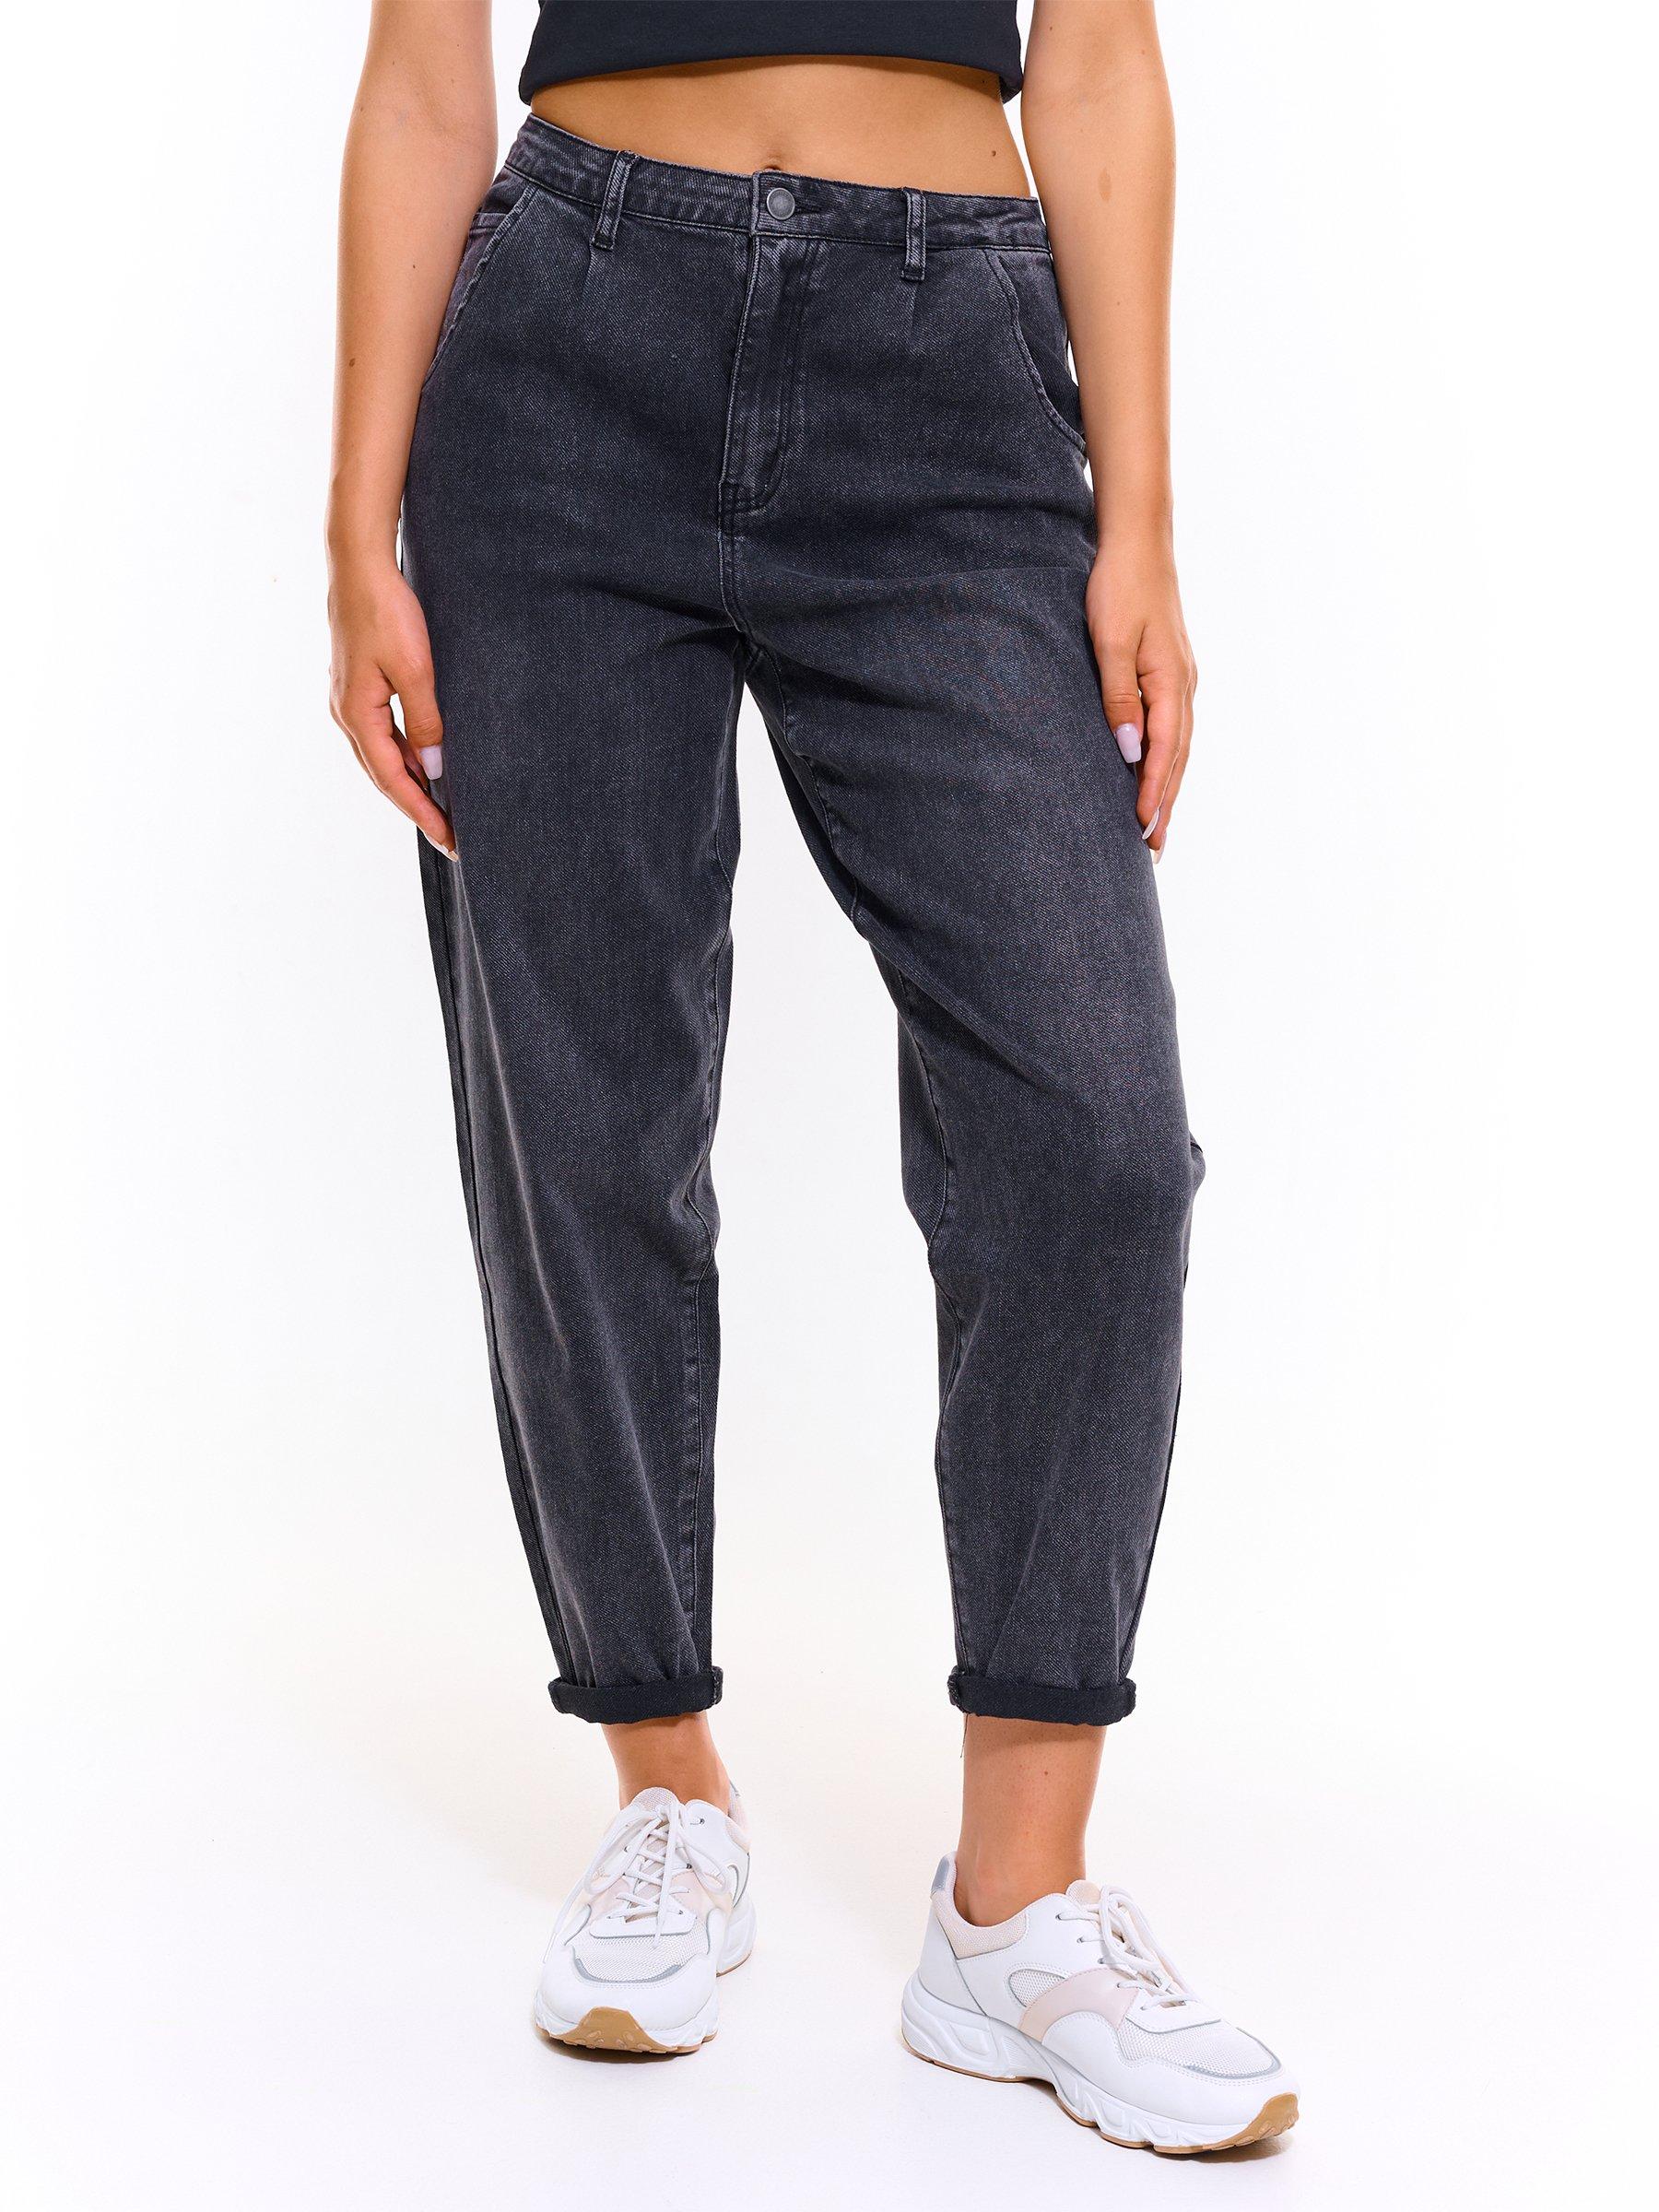 Pants | Womens GATE Mom fit jeans Grey, Black